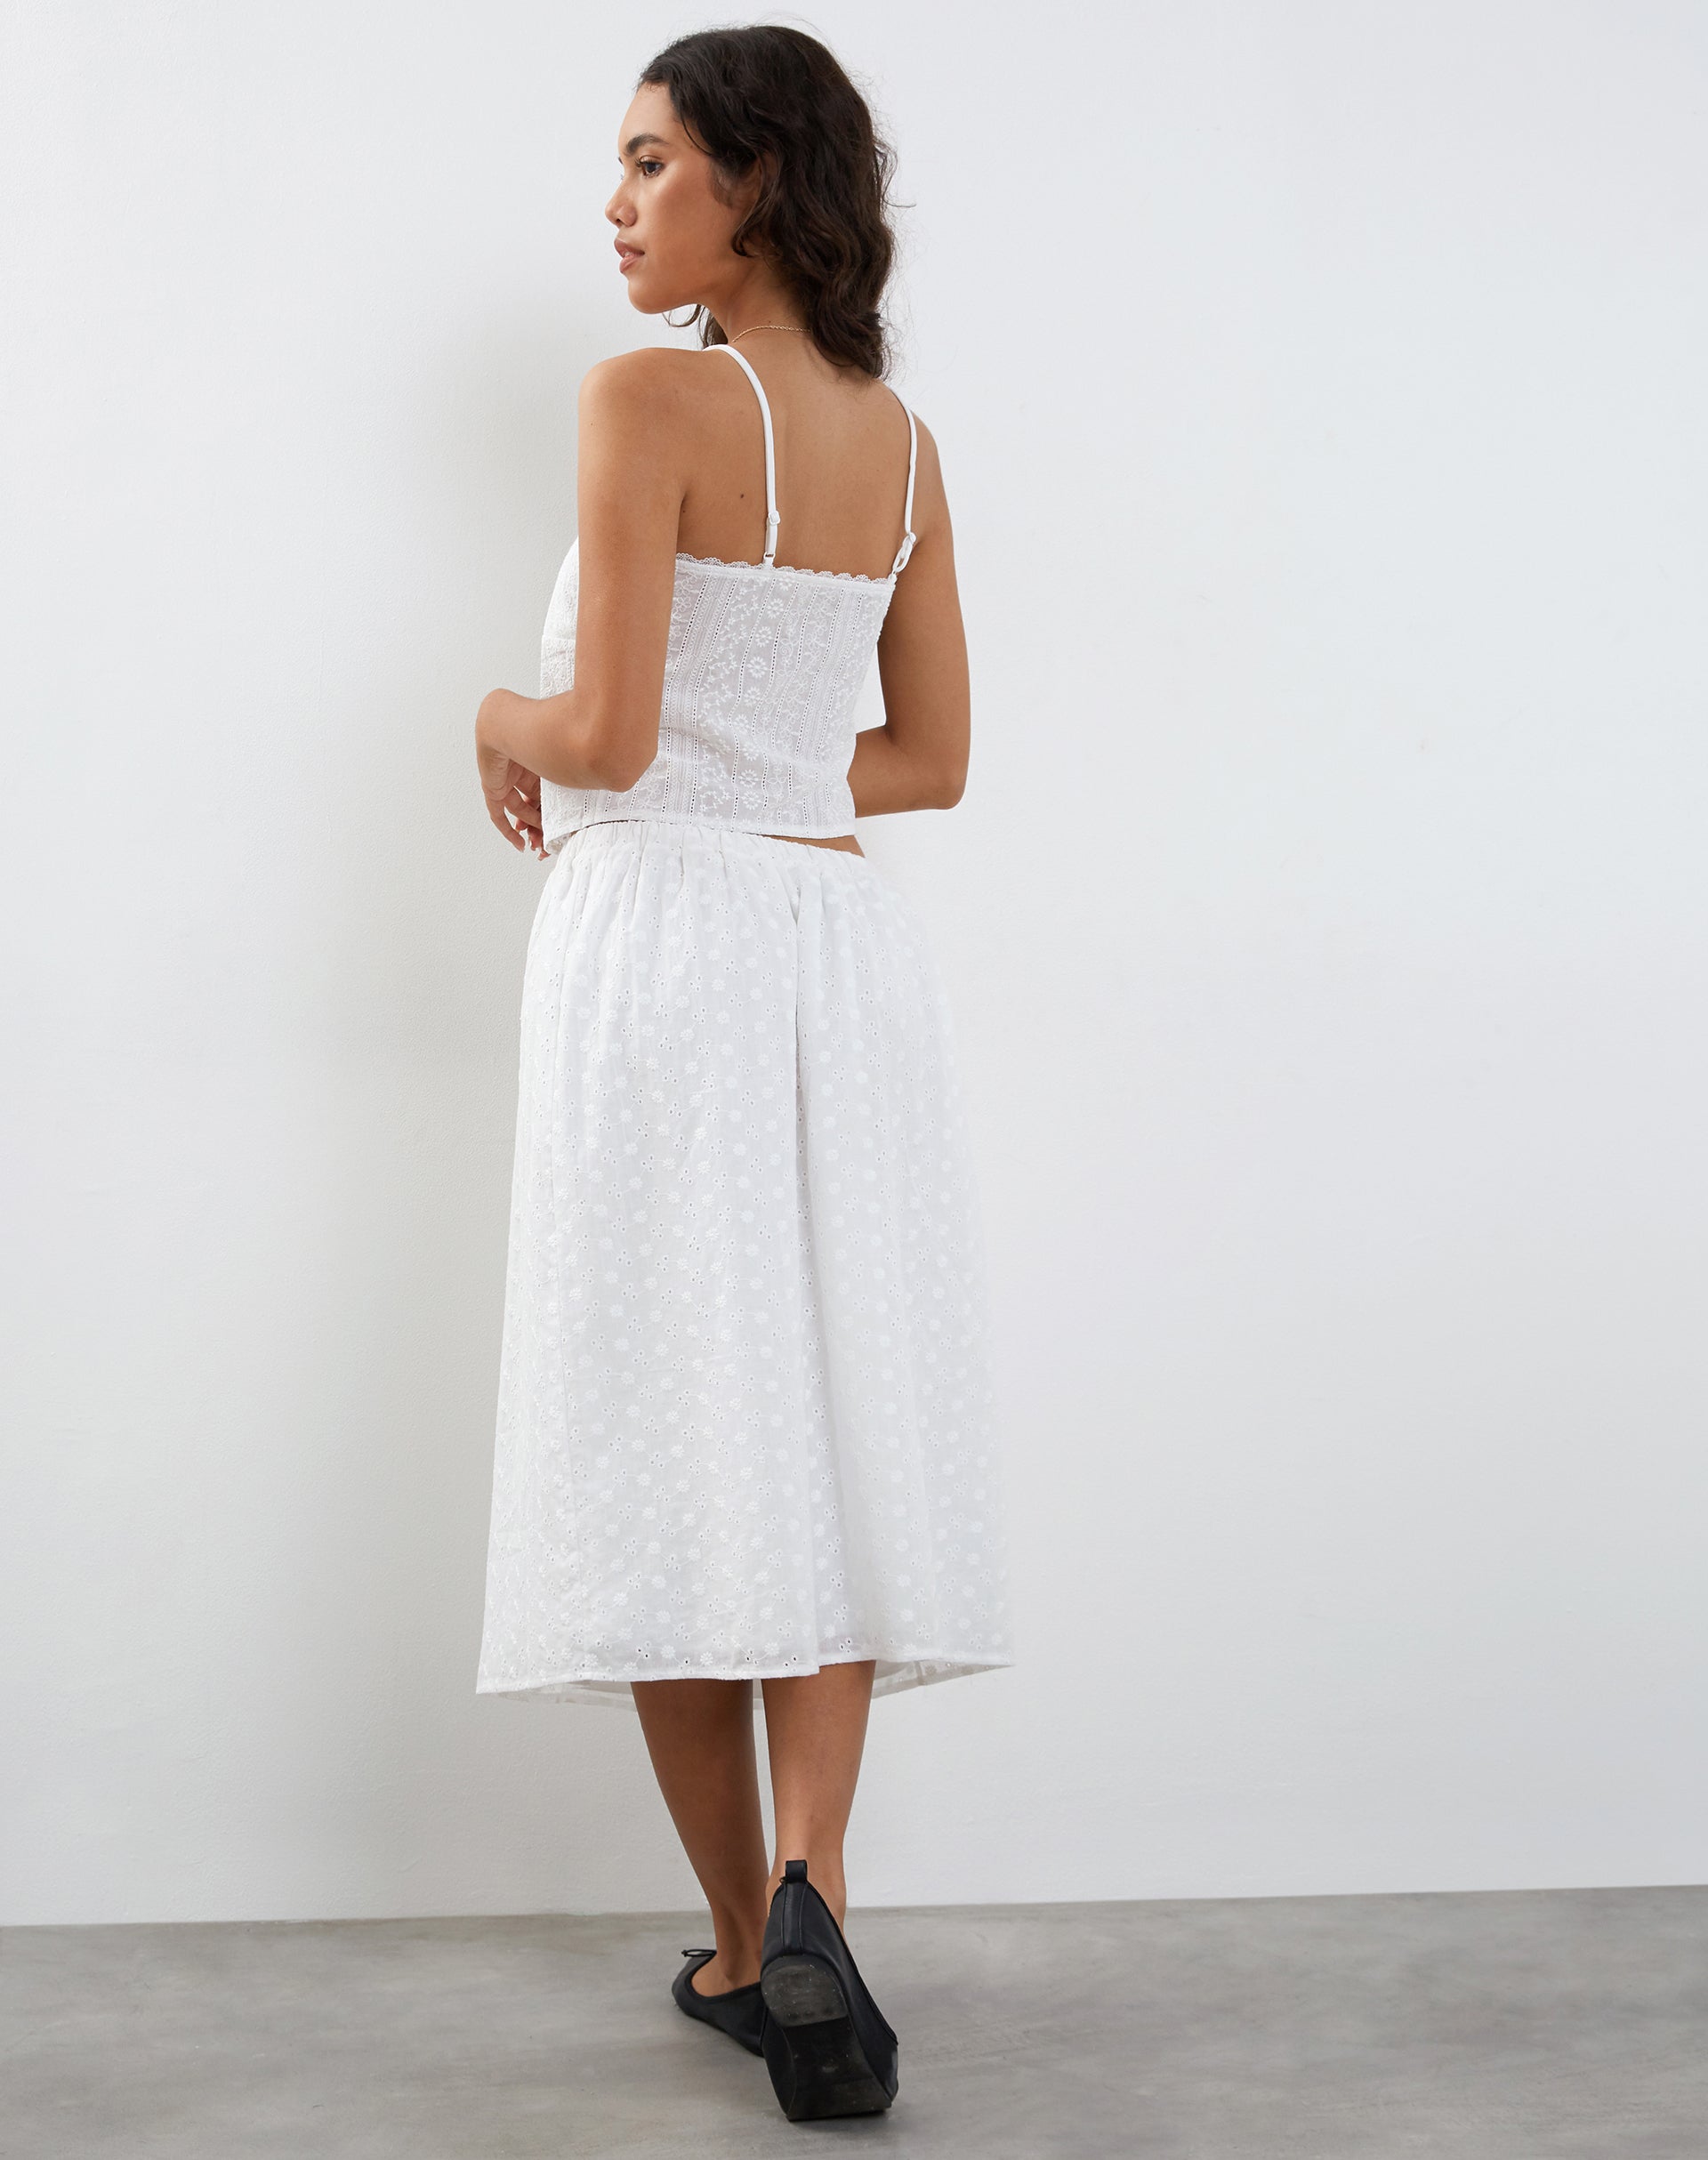 Image of Rusma Midi Skirt in White Broderie